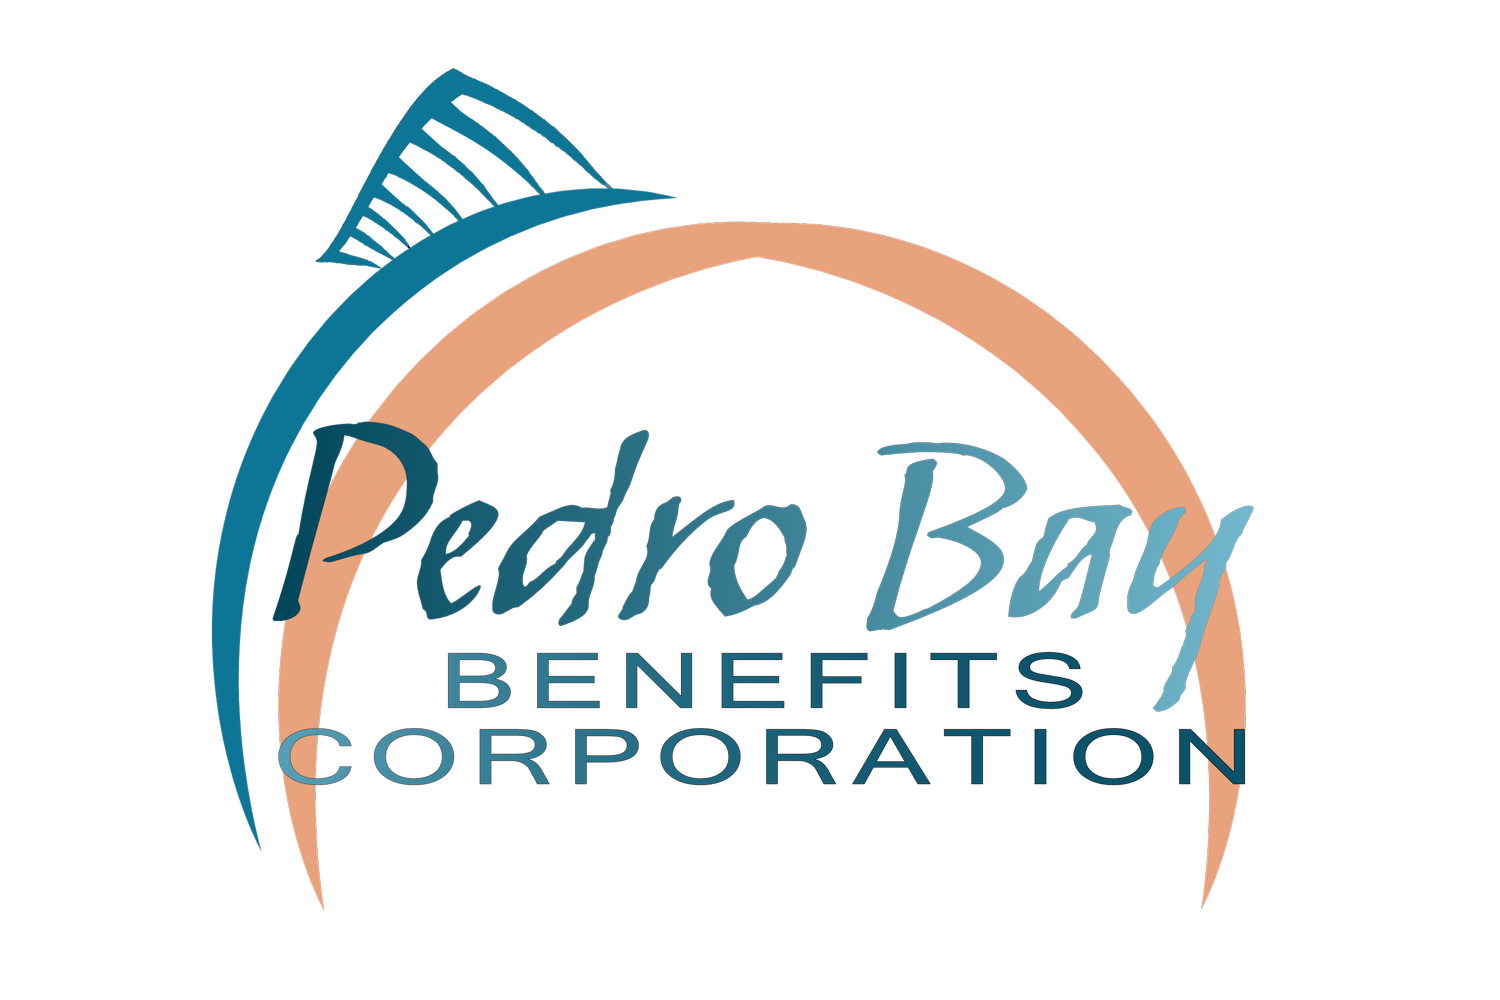 Pedro Bay Benefits Corporation